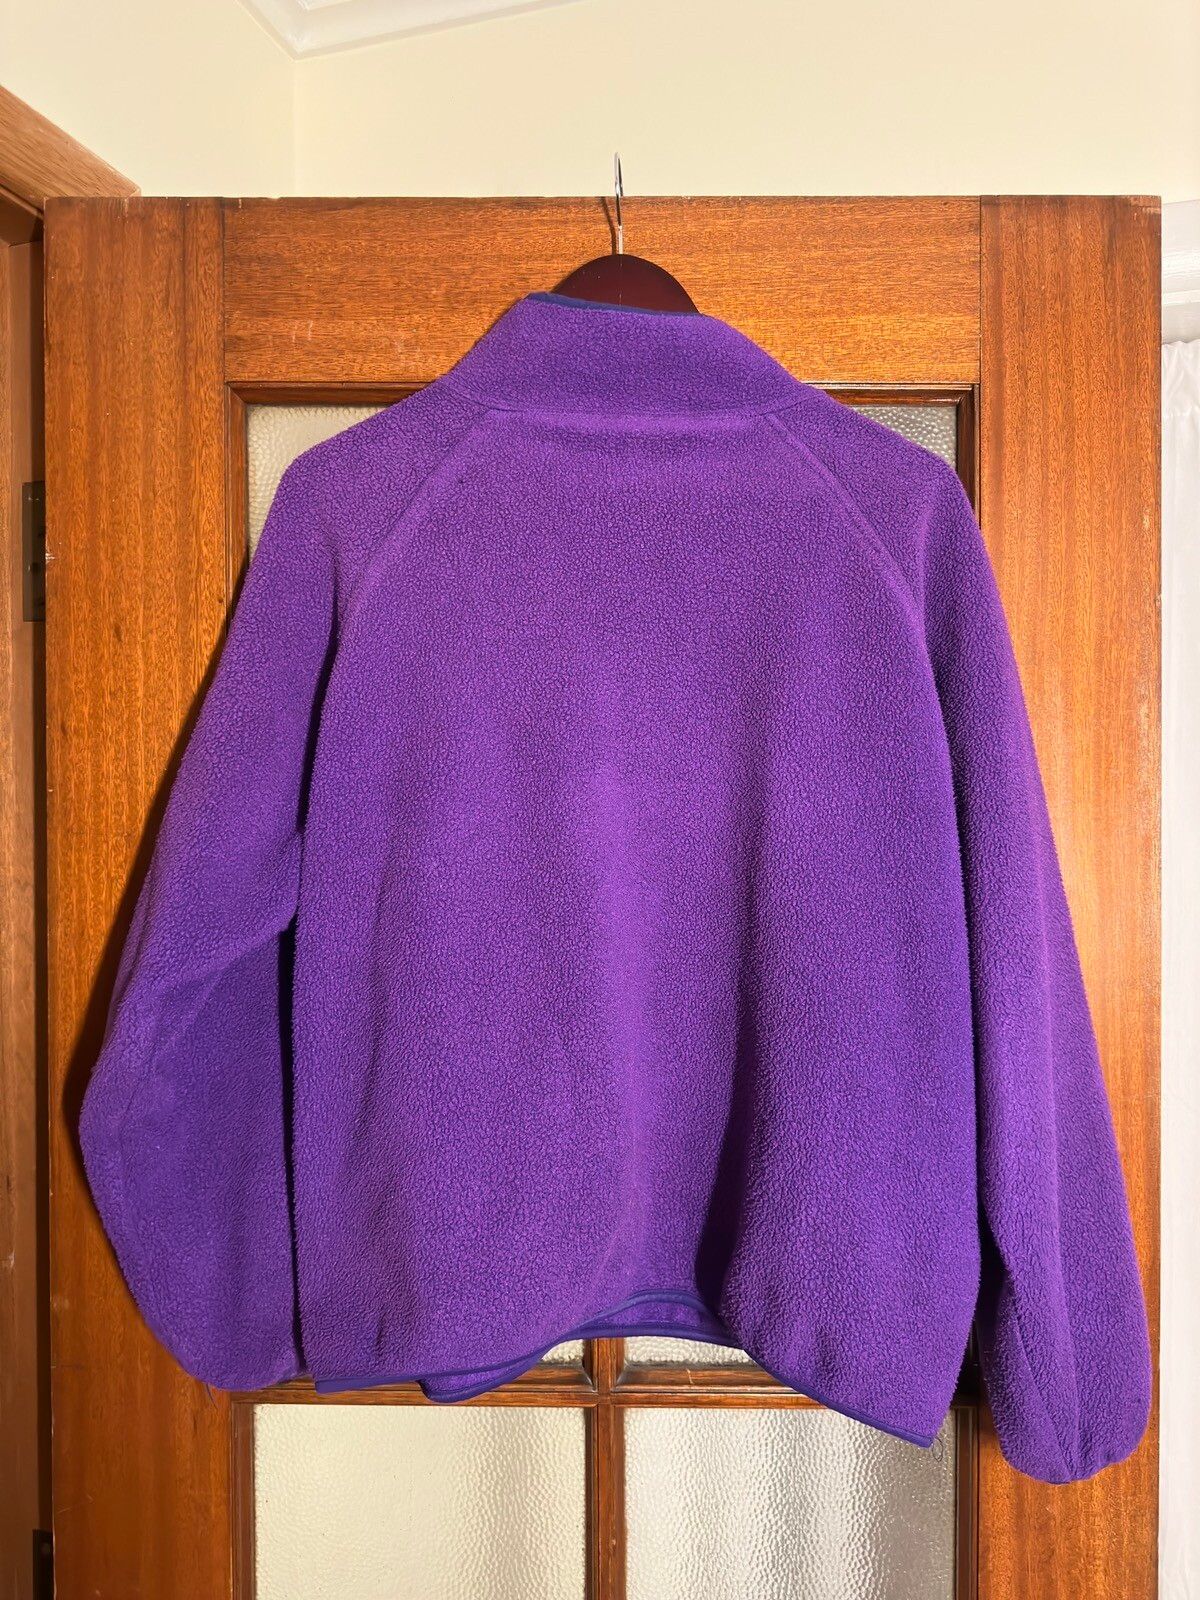 Woolrich Woolen Mills Vintage Woolrich Fleece Pullover Size L / US 10 / IT 46 - 2 Preview